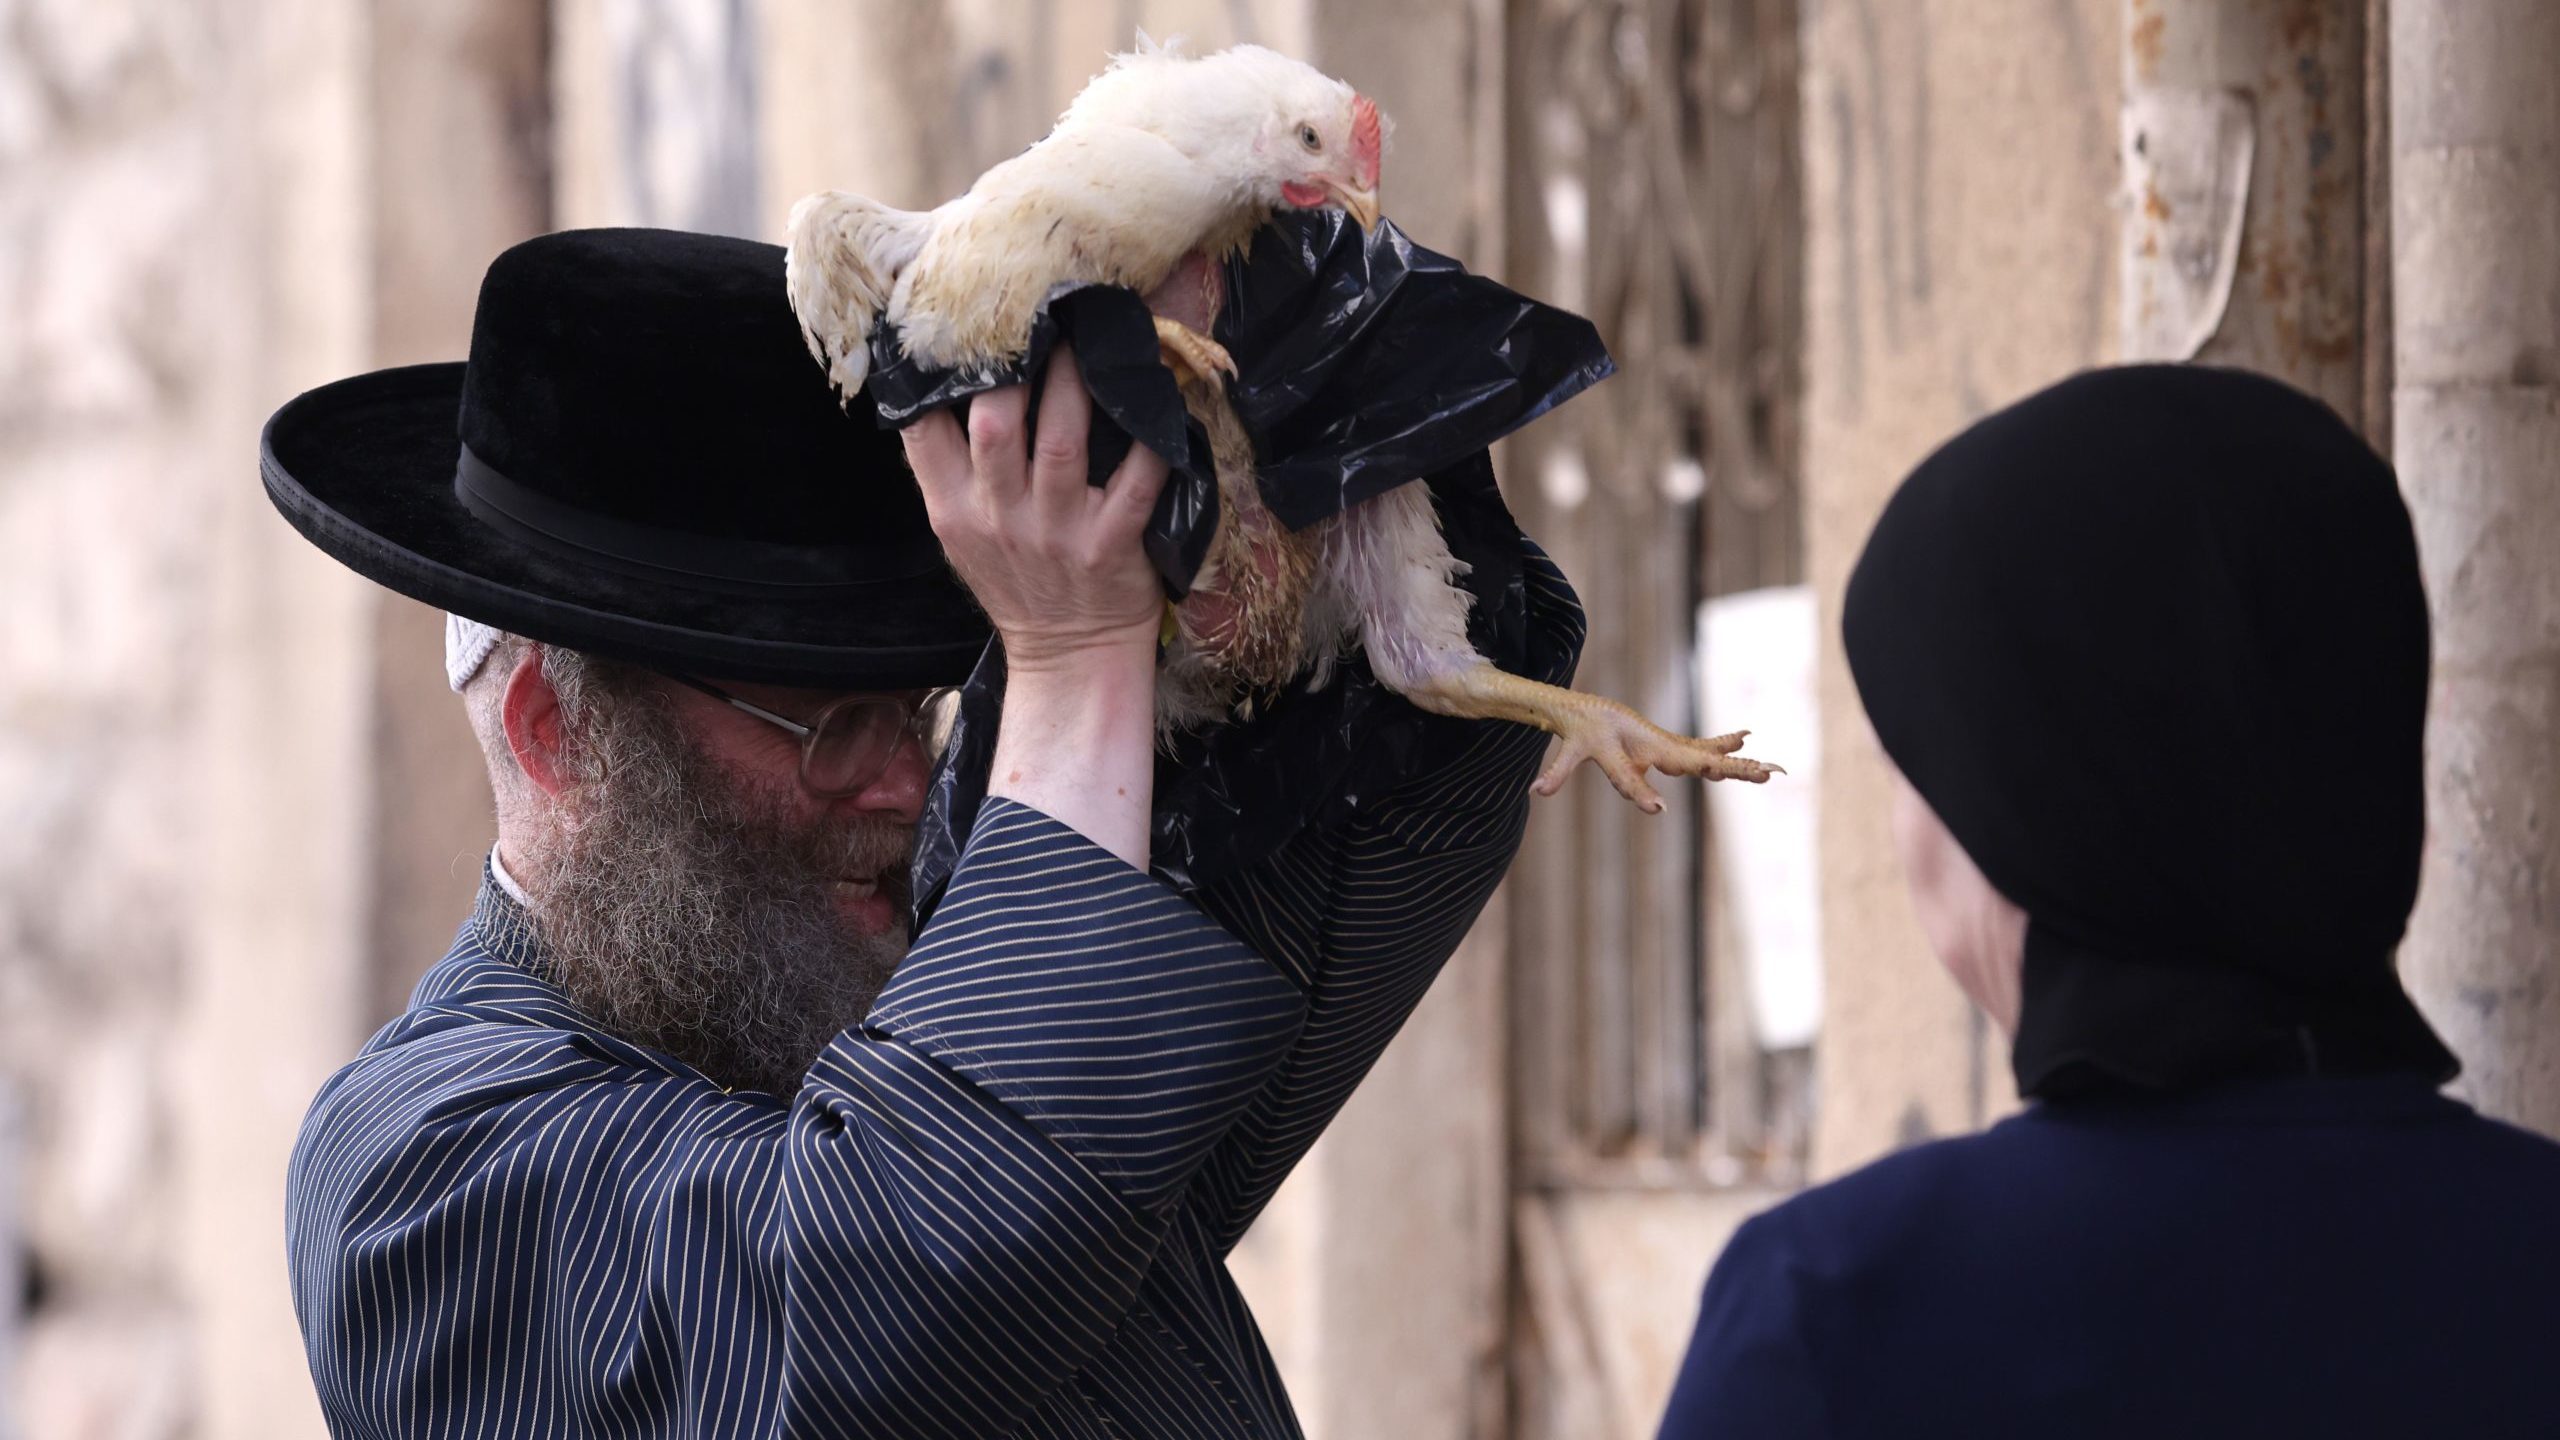 Yom Kippur under Lockdown (VIDEO REPORT)